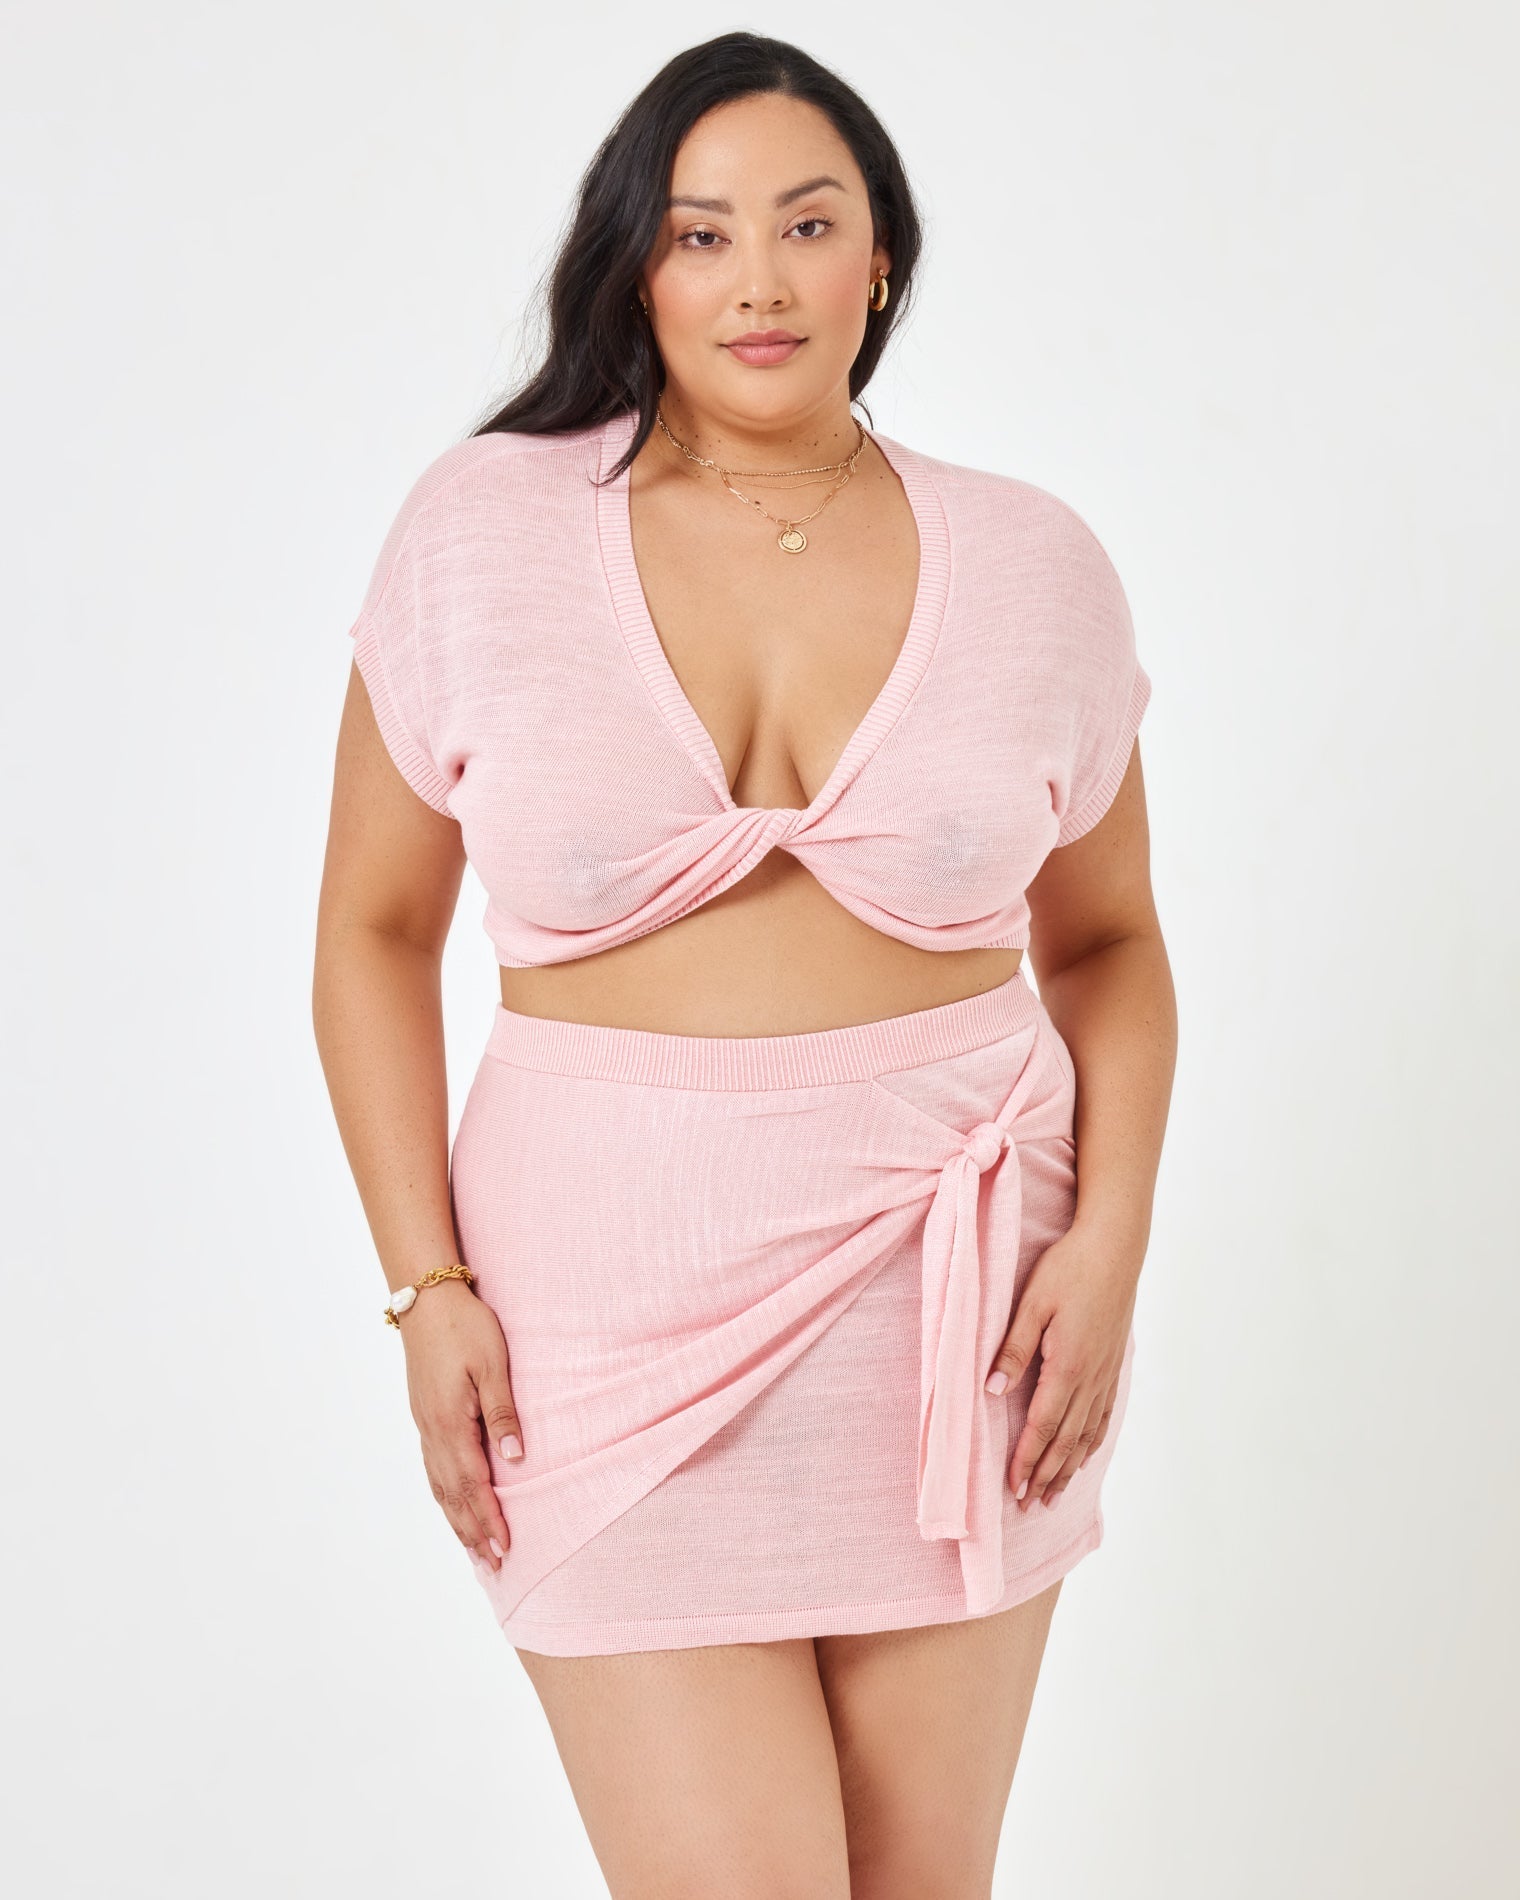 Vagabond Skirt - Blossom Blossom | Model: Bianca (size: XL)